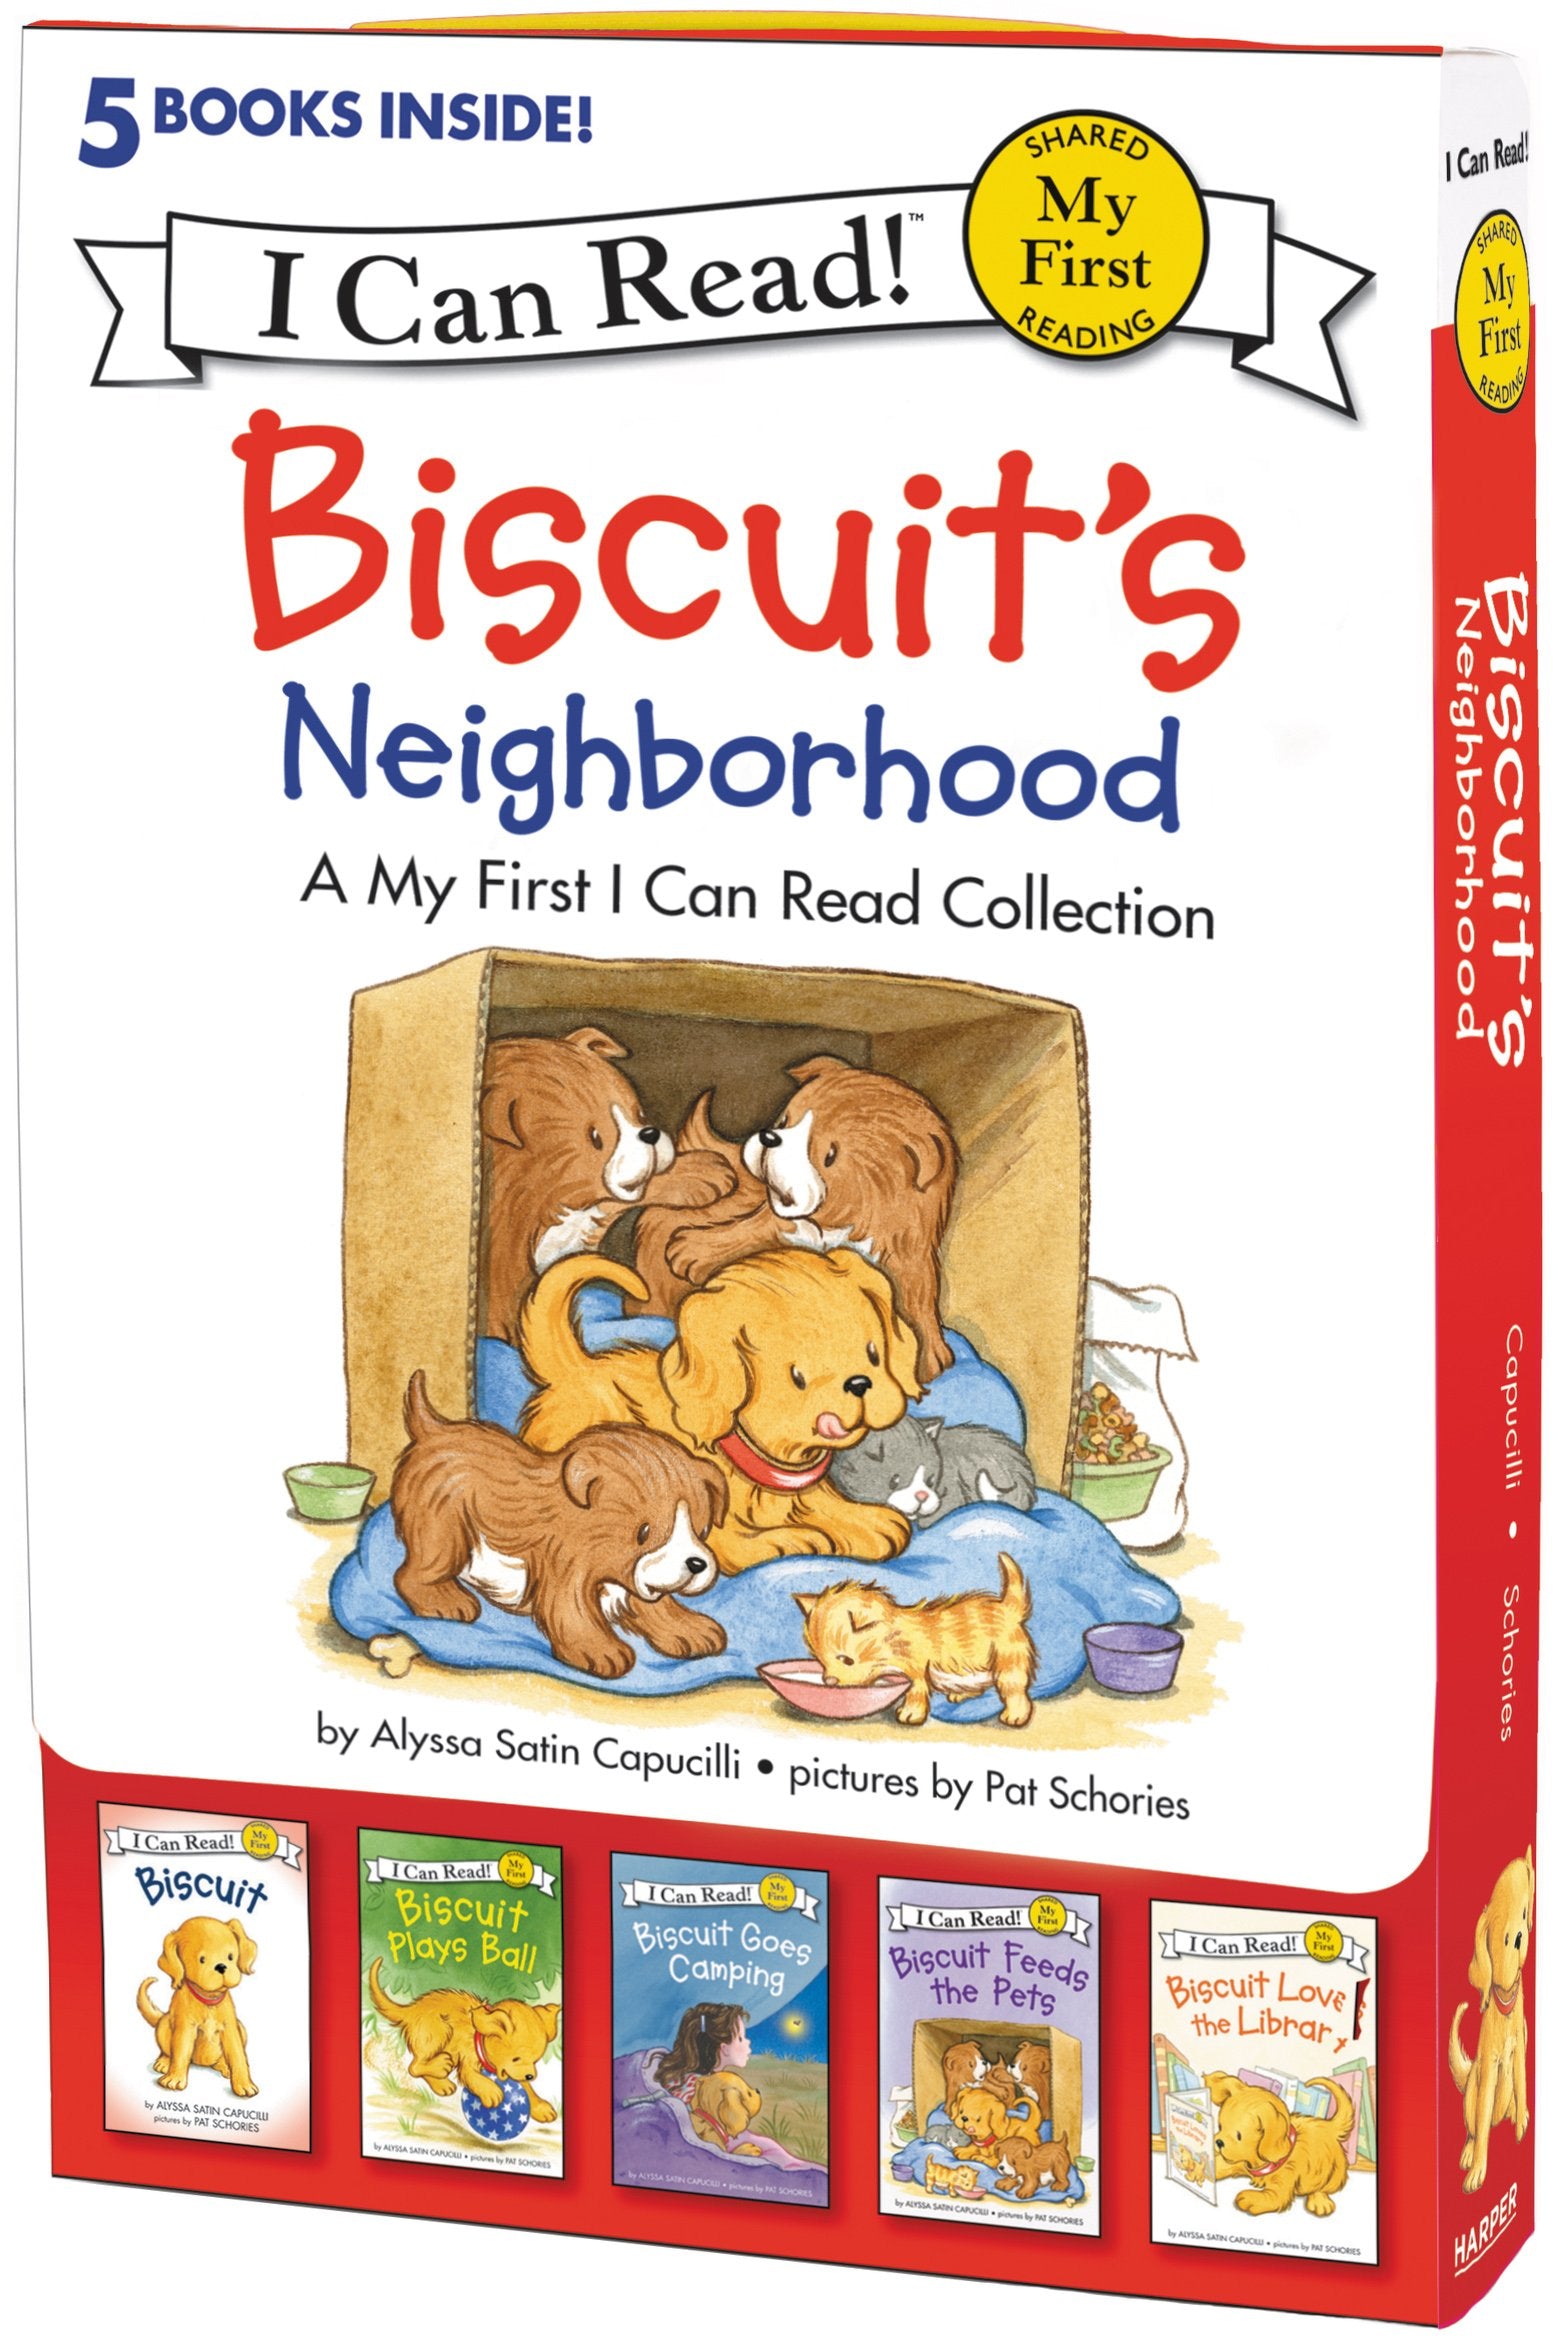 Biscuit's Neighborhood: 5 Fun-Filled Stories in 1 Box! by Capucilli, Alyssa Satin